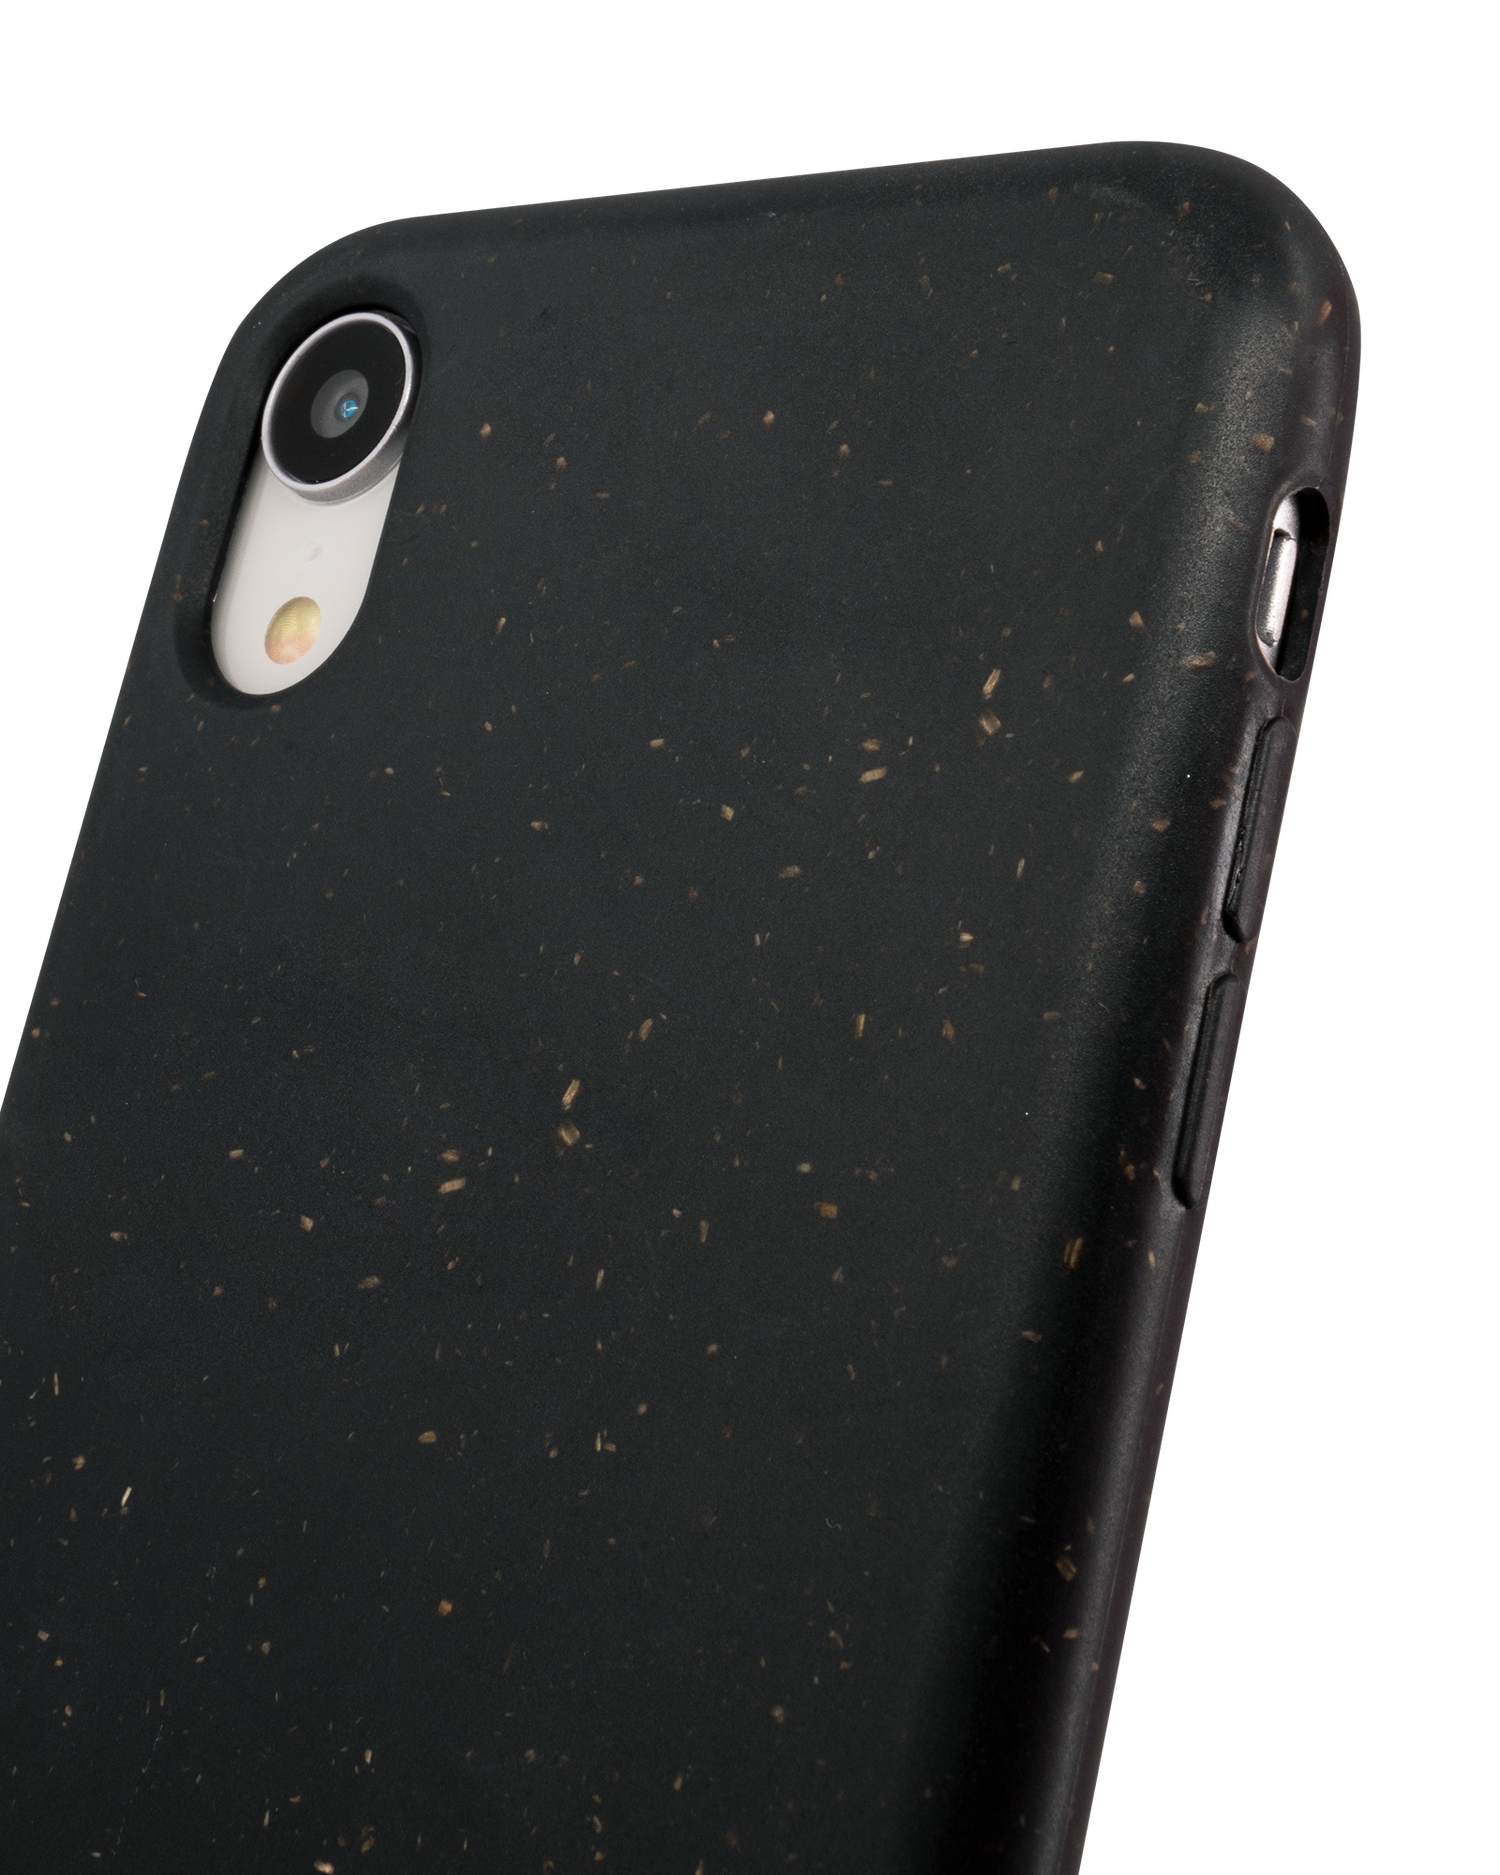 Black Eco-Friendly Phone Case for Apple iPhone XR: Details inside